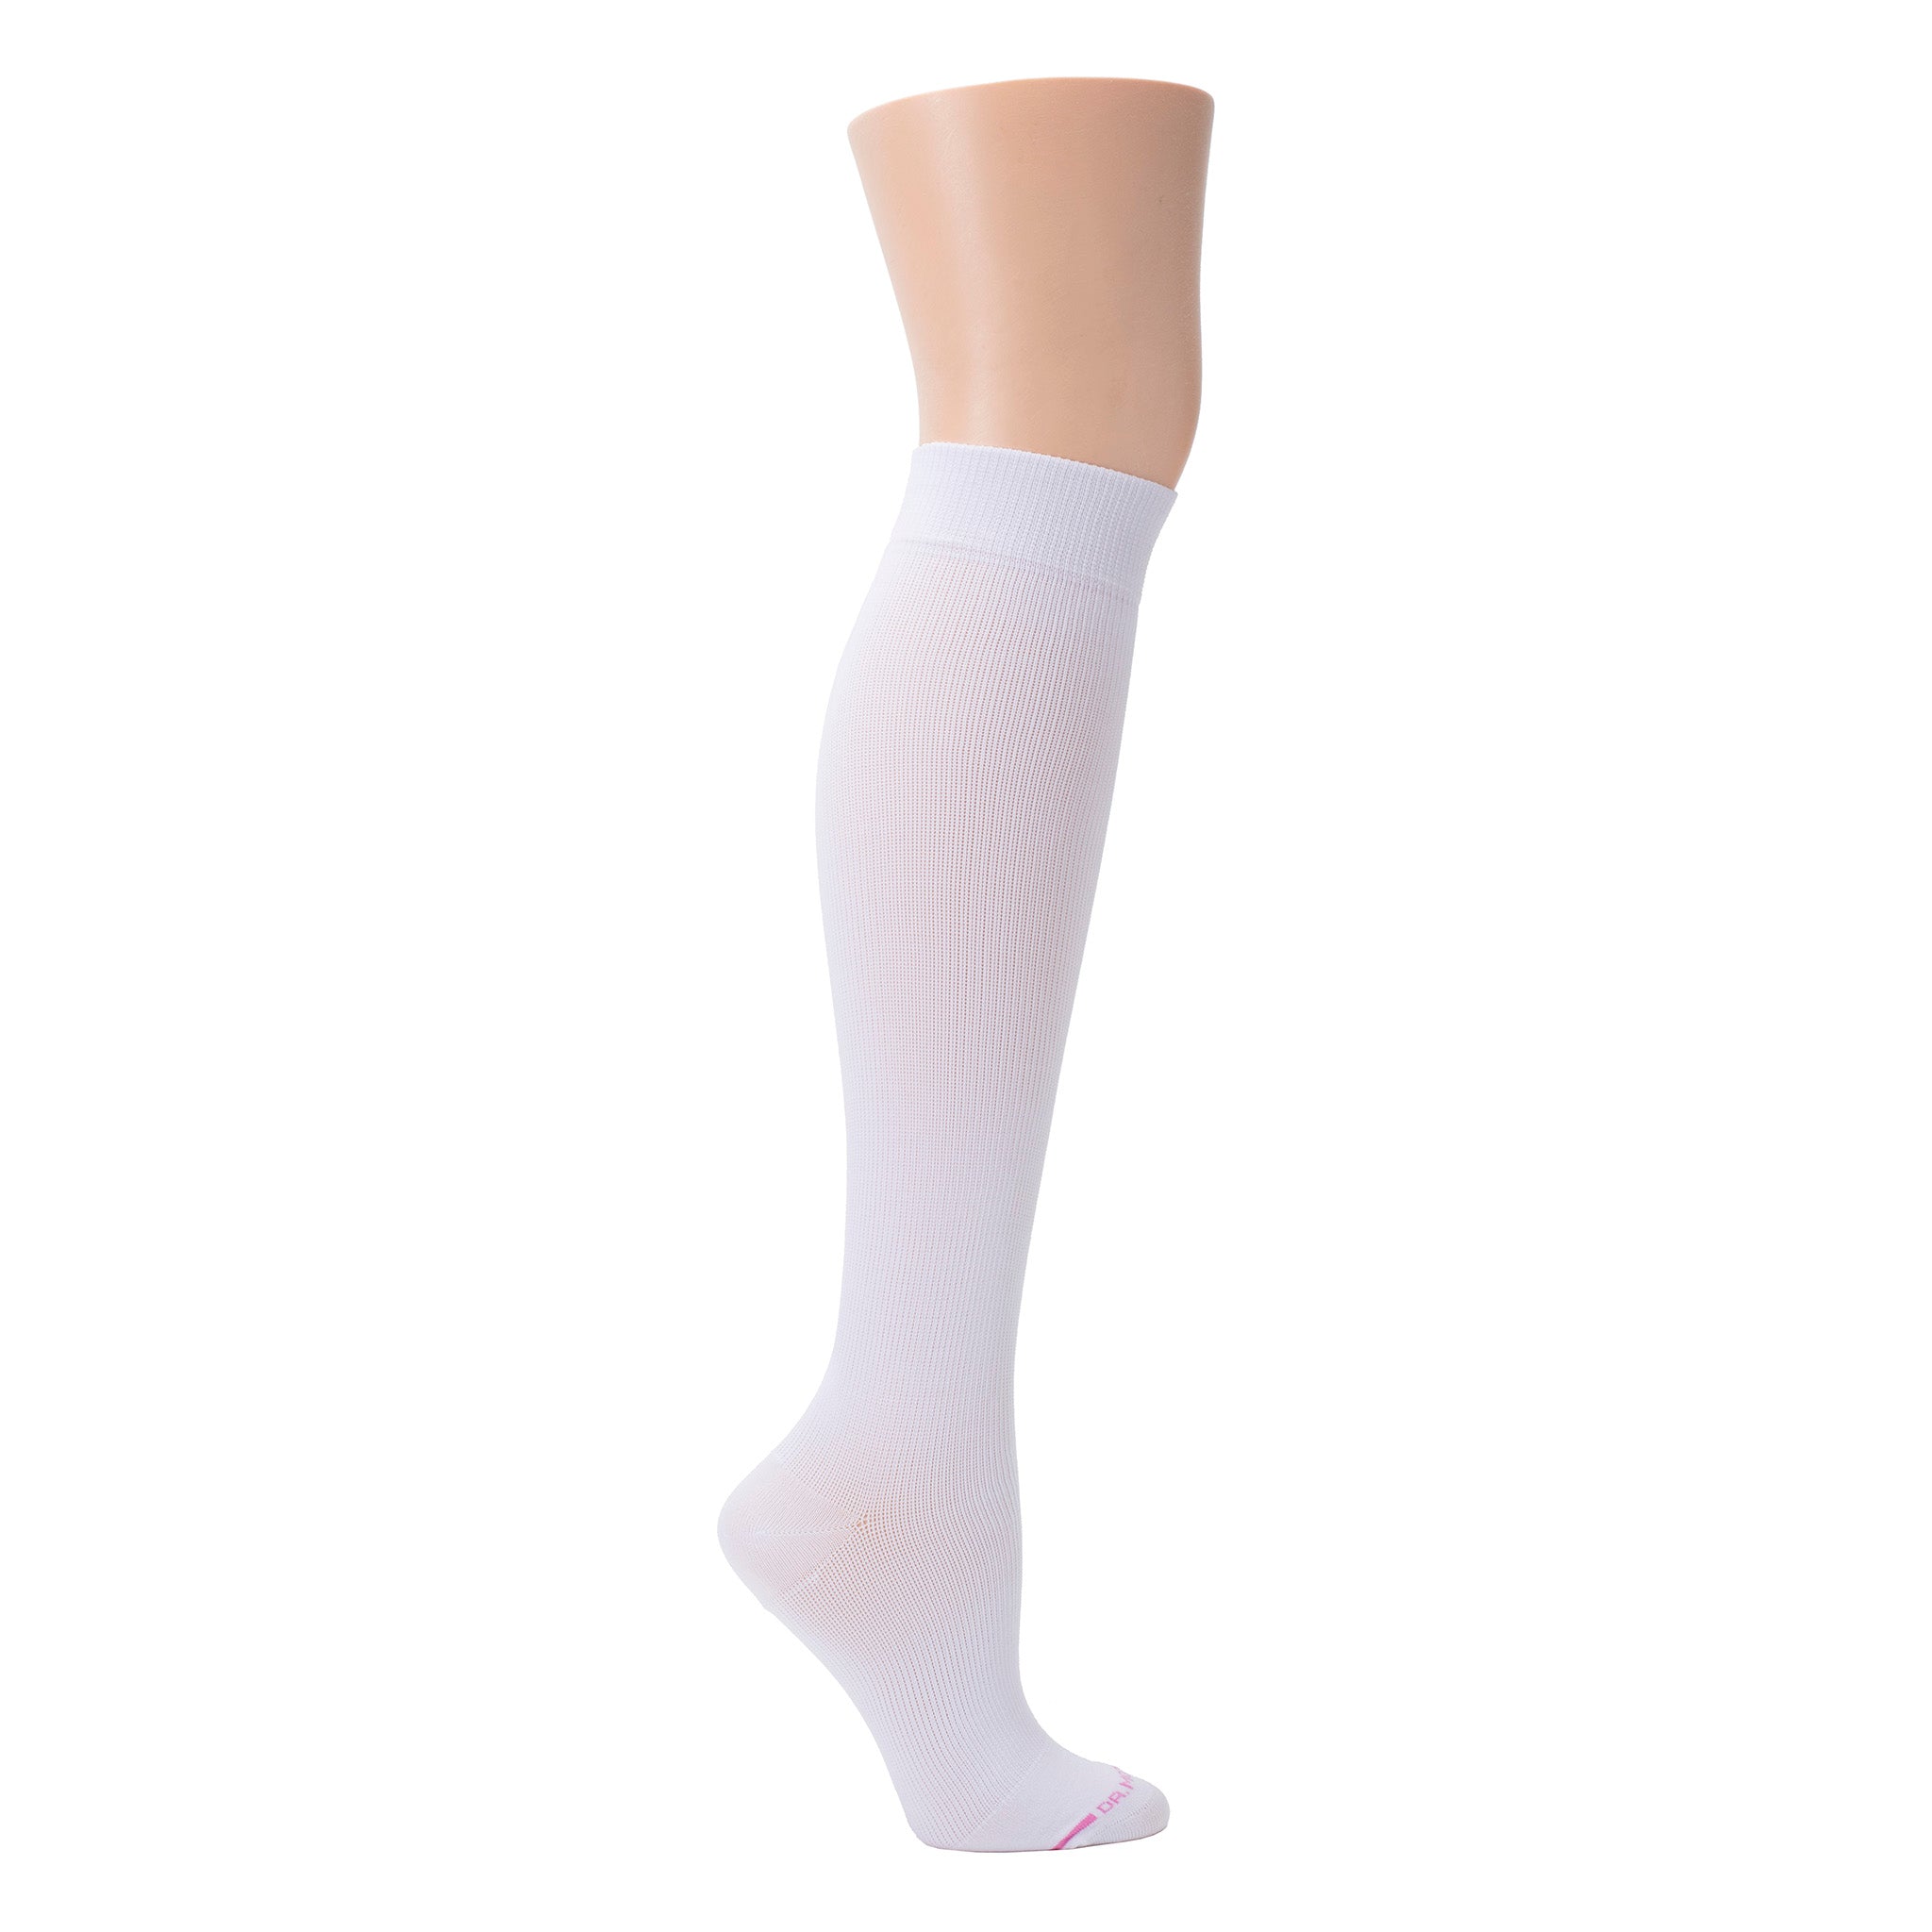 11.4-12.2 Knee High Closed Toe Compression Calf Socks for Women